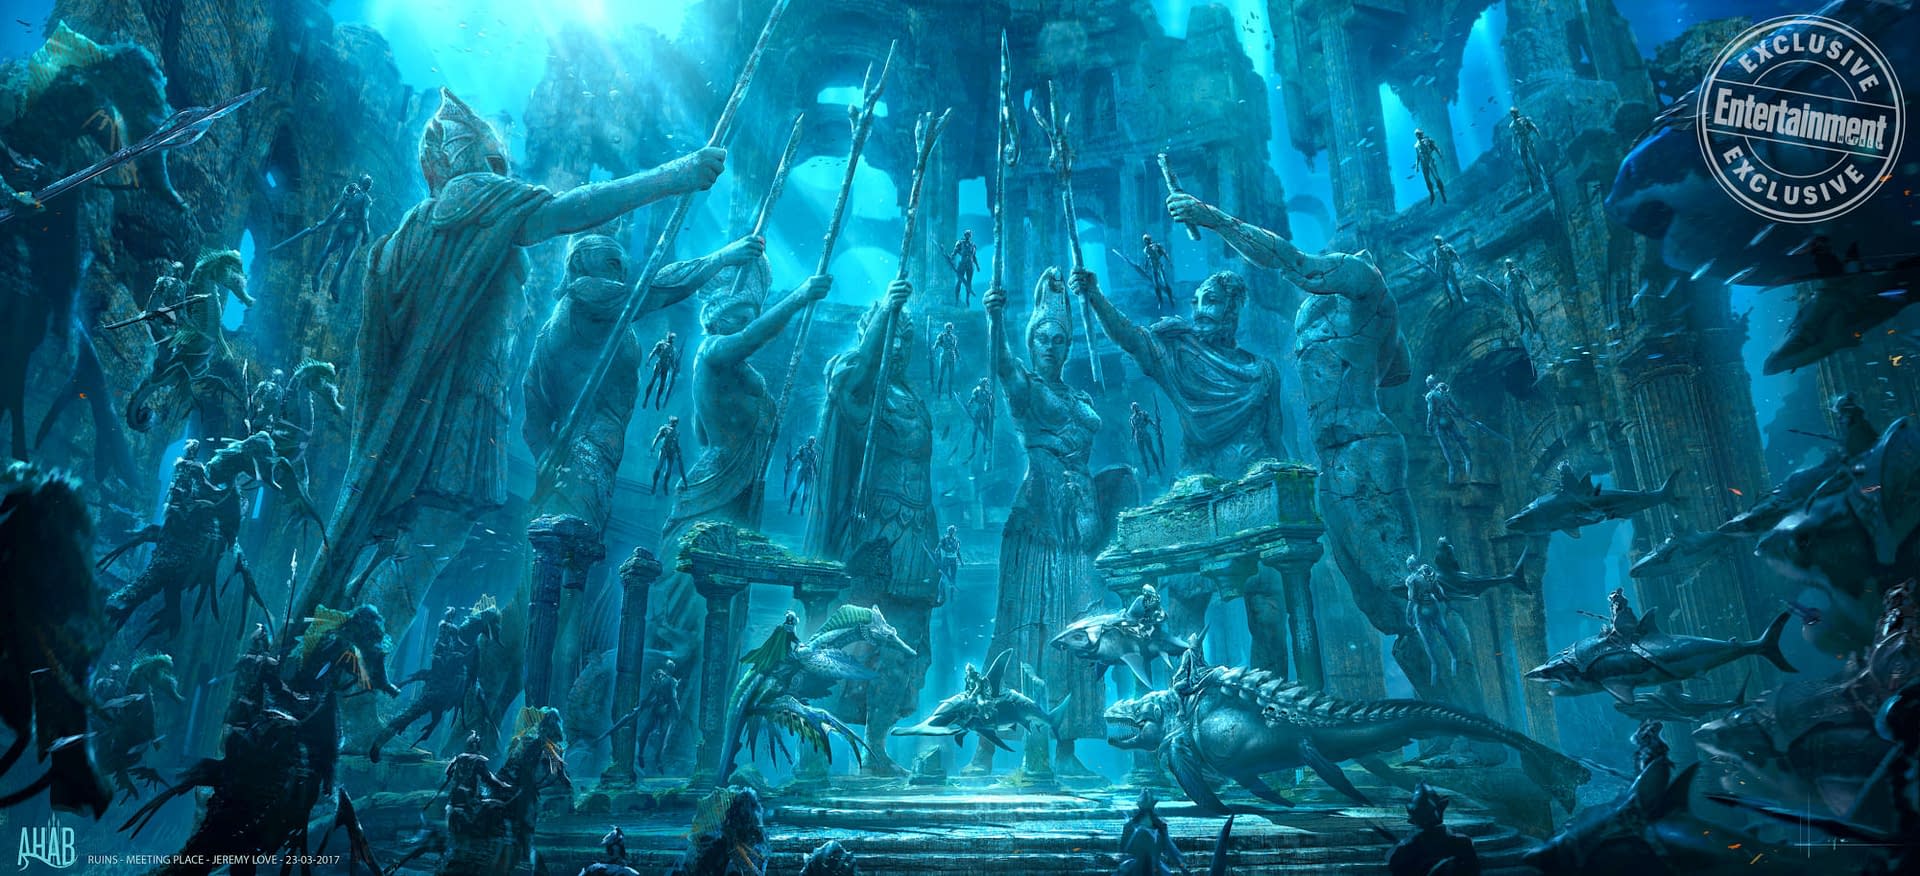 Aquaman Image and Concept Art Show Warriors of Atlantis Riding Sharks